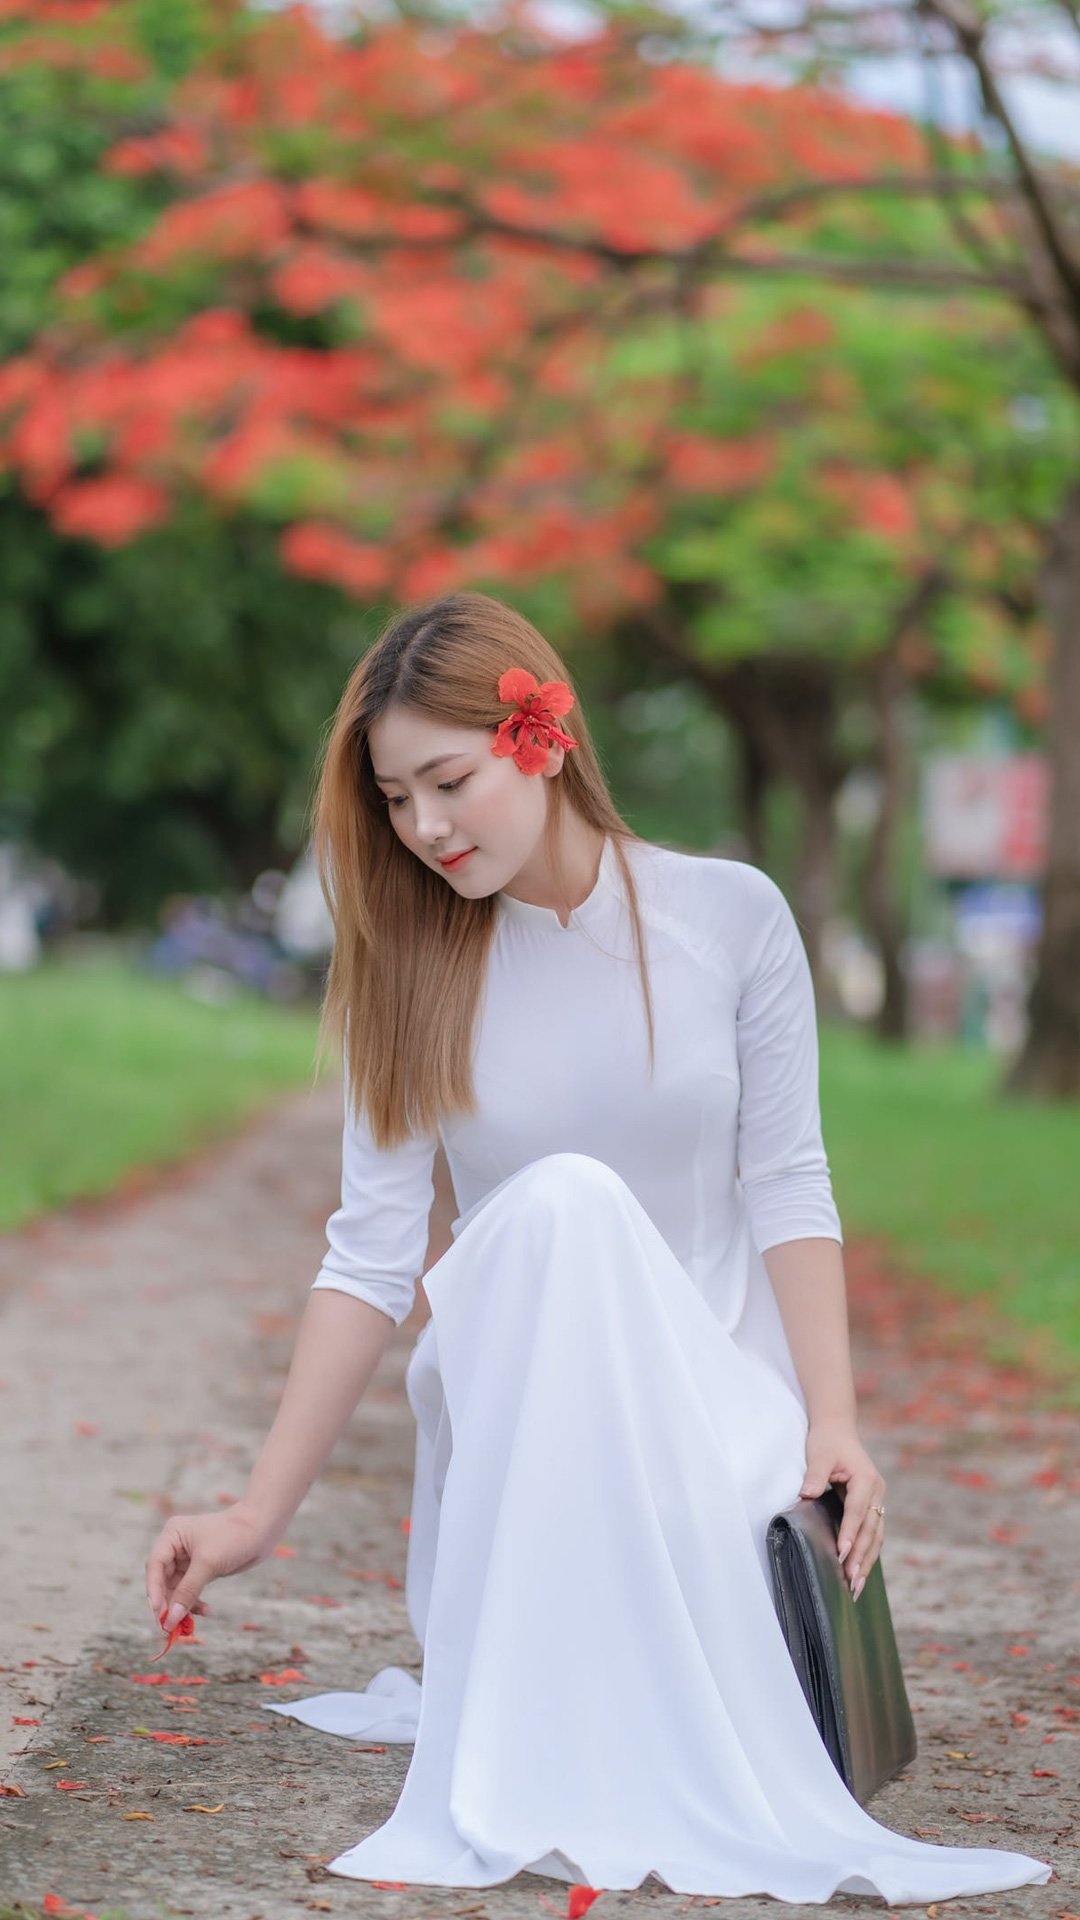 Ao Dai - The Ao Dai, the traditional dress of Vietnamese women